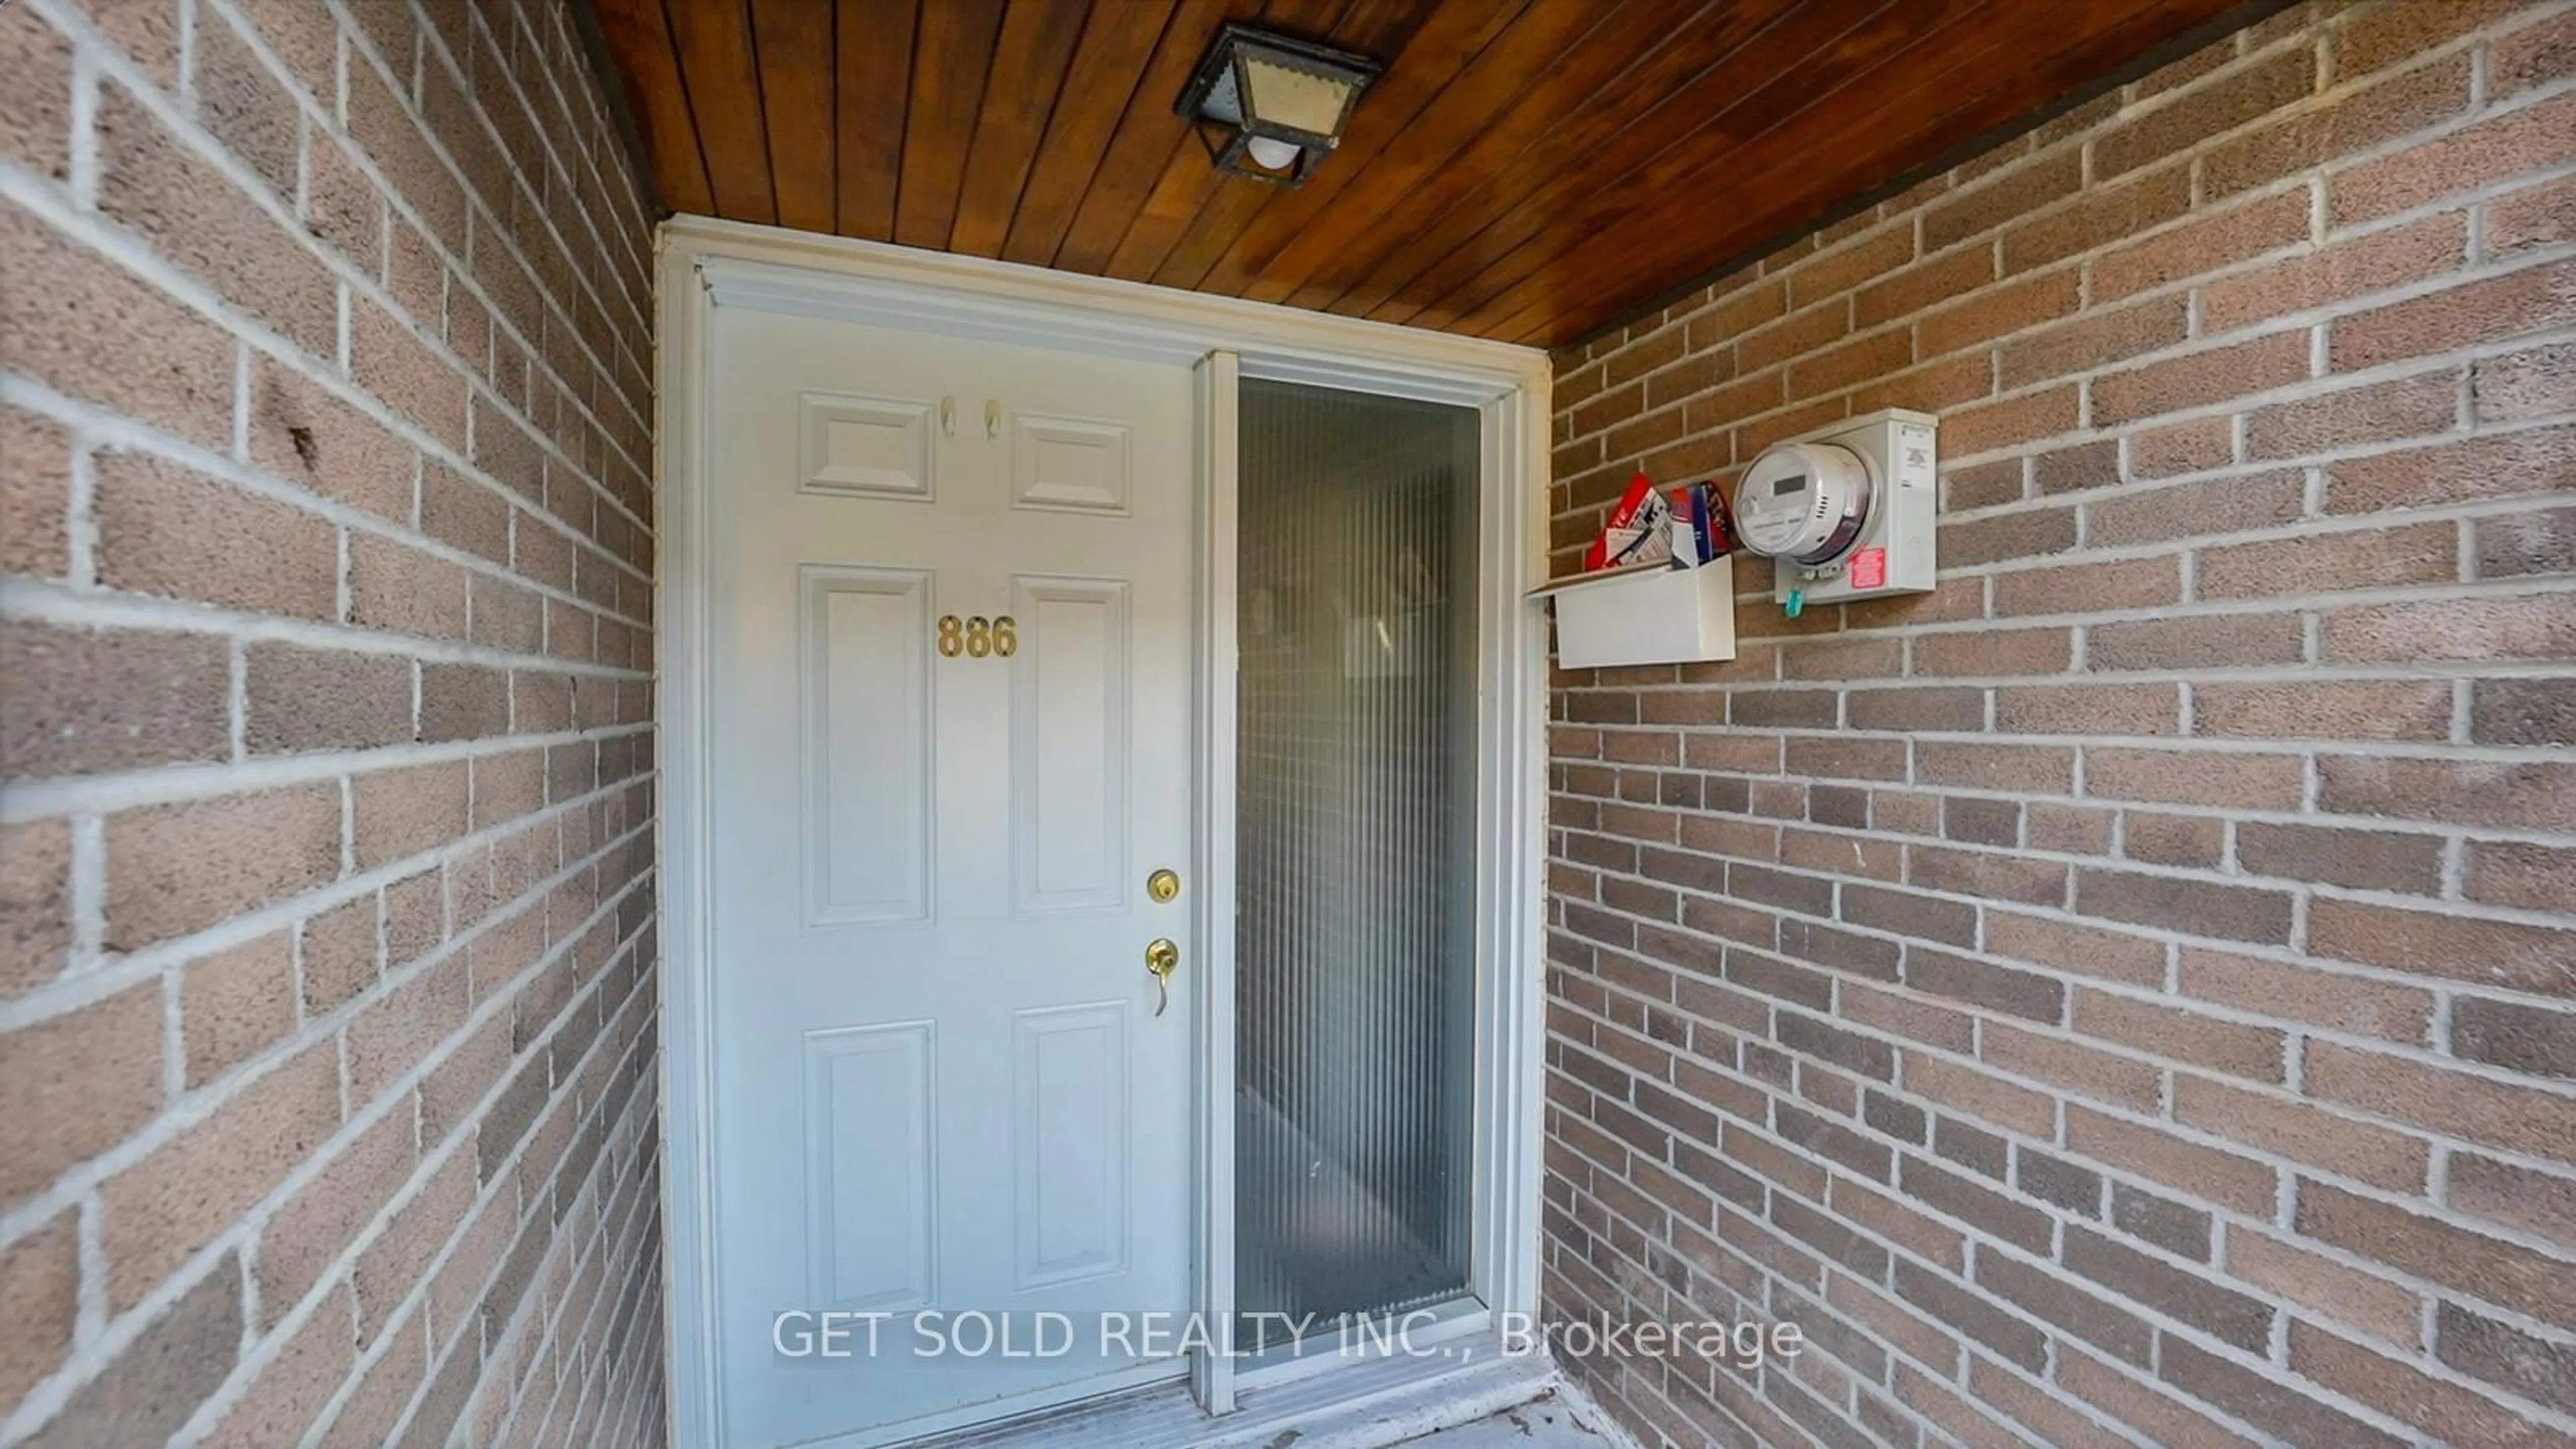 Indoor entryway for 34 Tandridge Cres #886, Toronto Ontario M9W 2P2